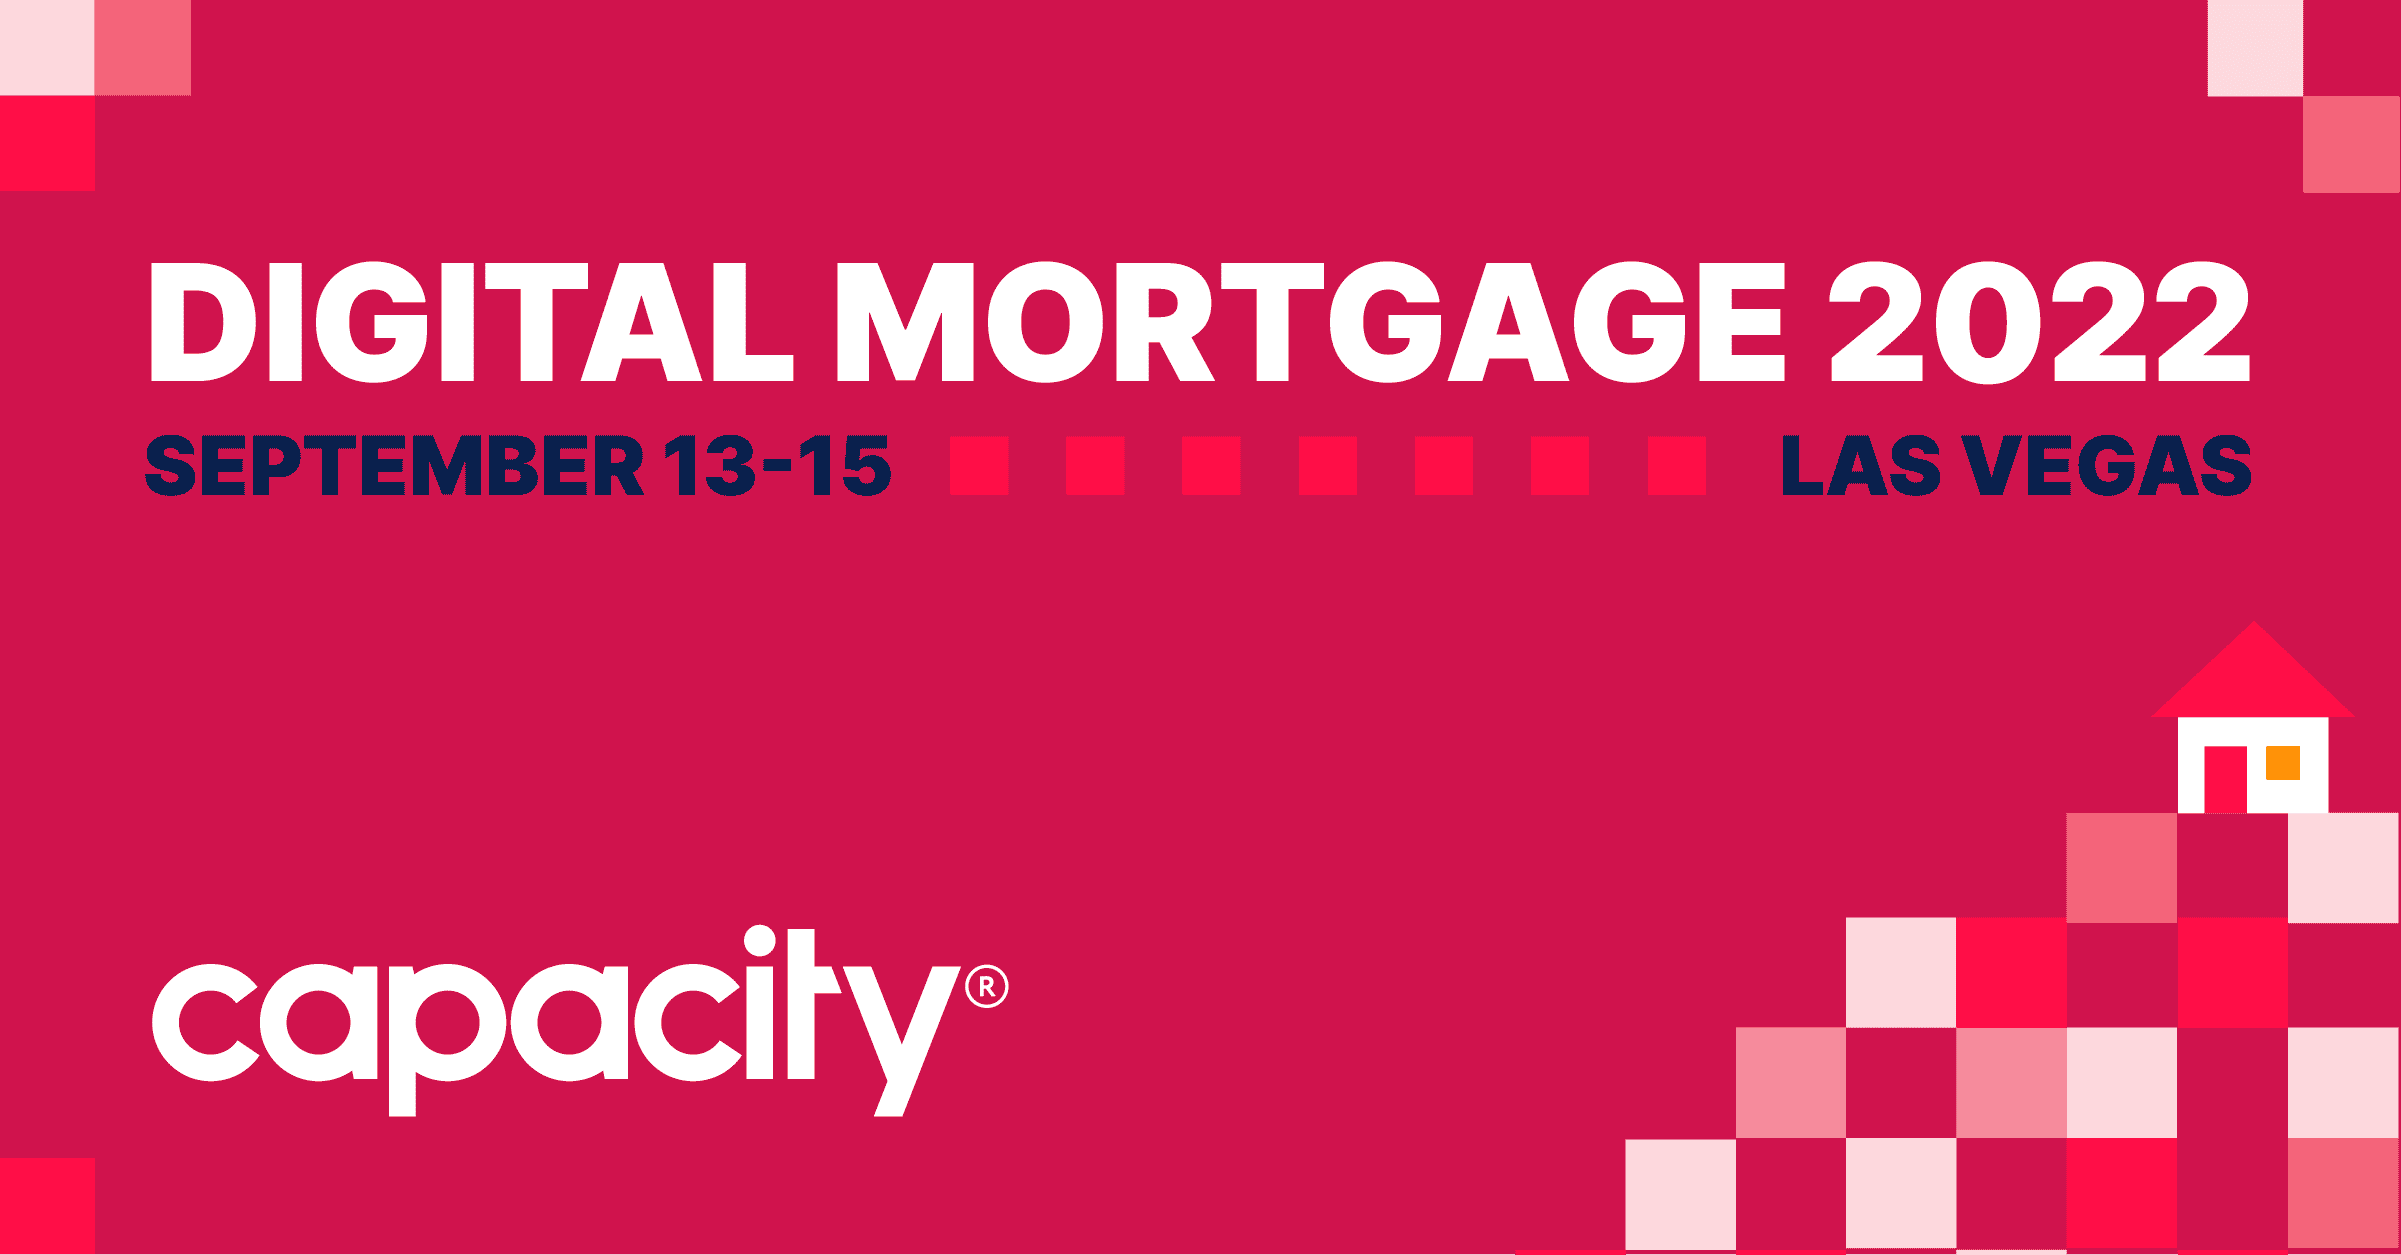 NMN’s Digital Mortgage 2022 Conference